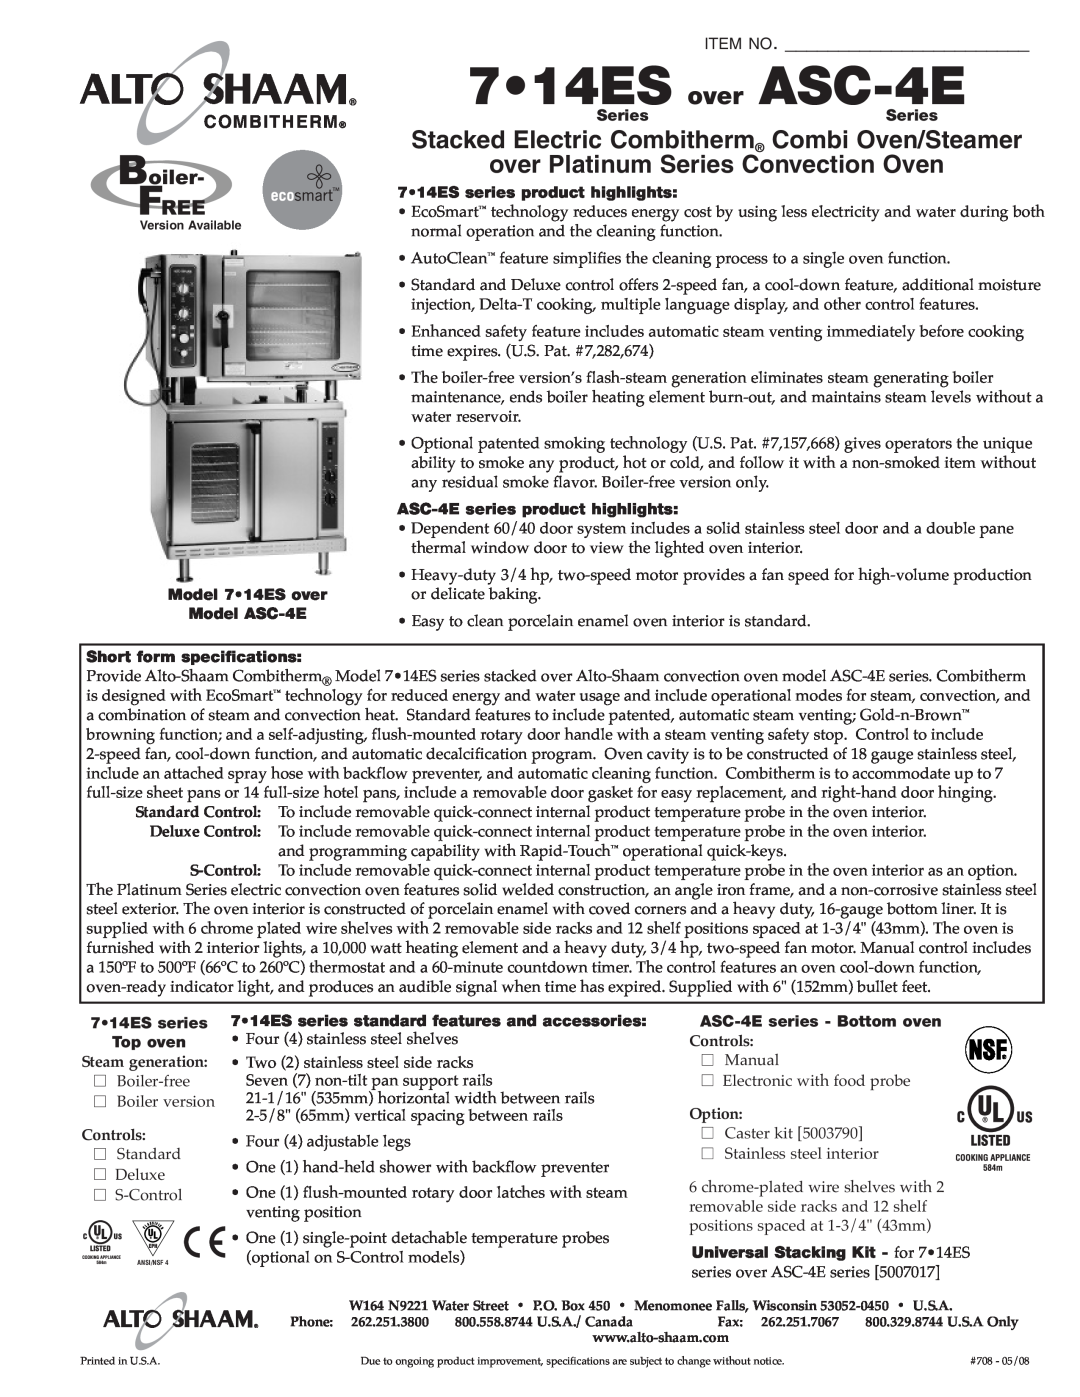 Alto-Shaam Convection Oven manual Model, Installation Operation Maintenance, ASC-2E ASC-4E Manual Control, with 